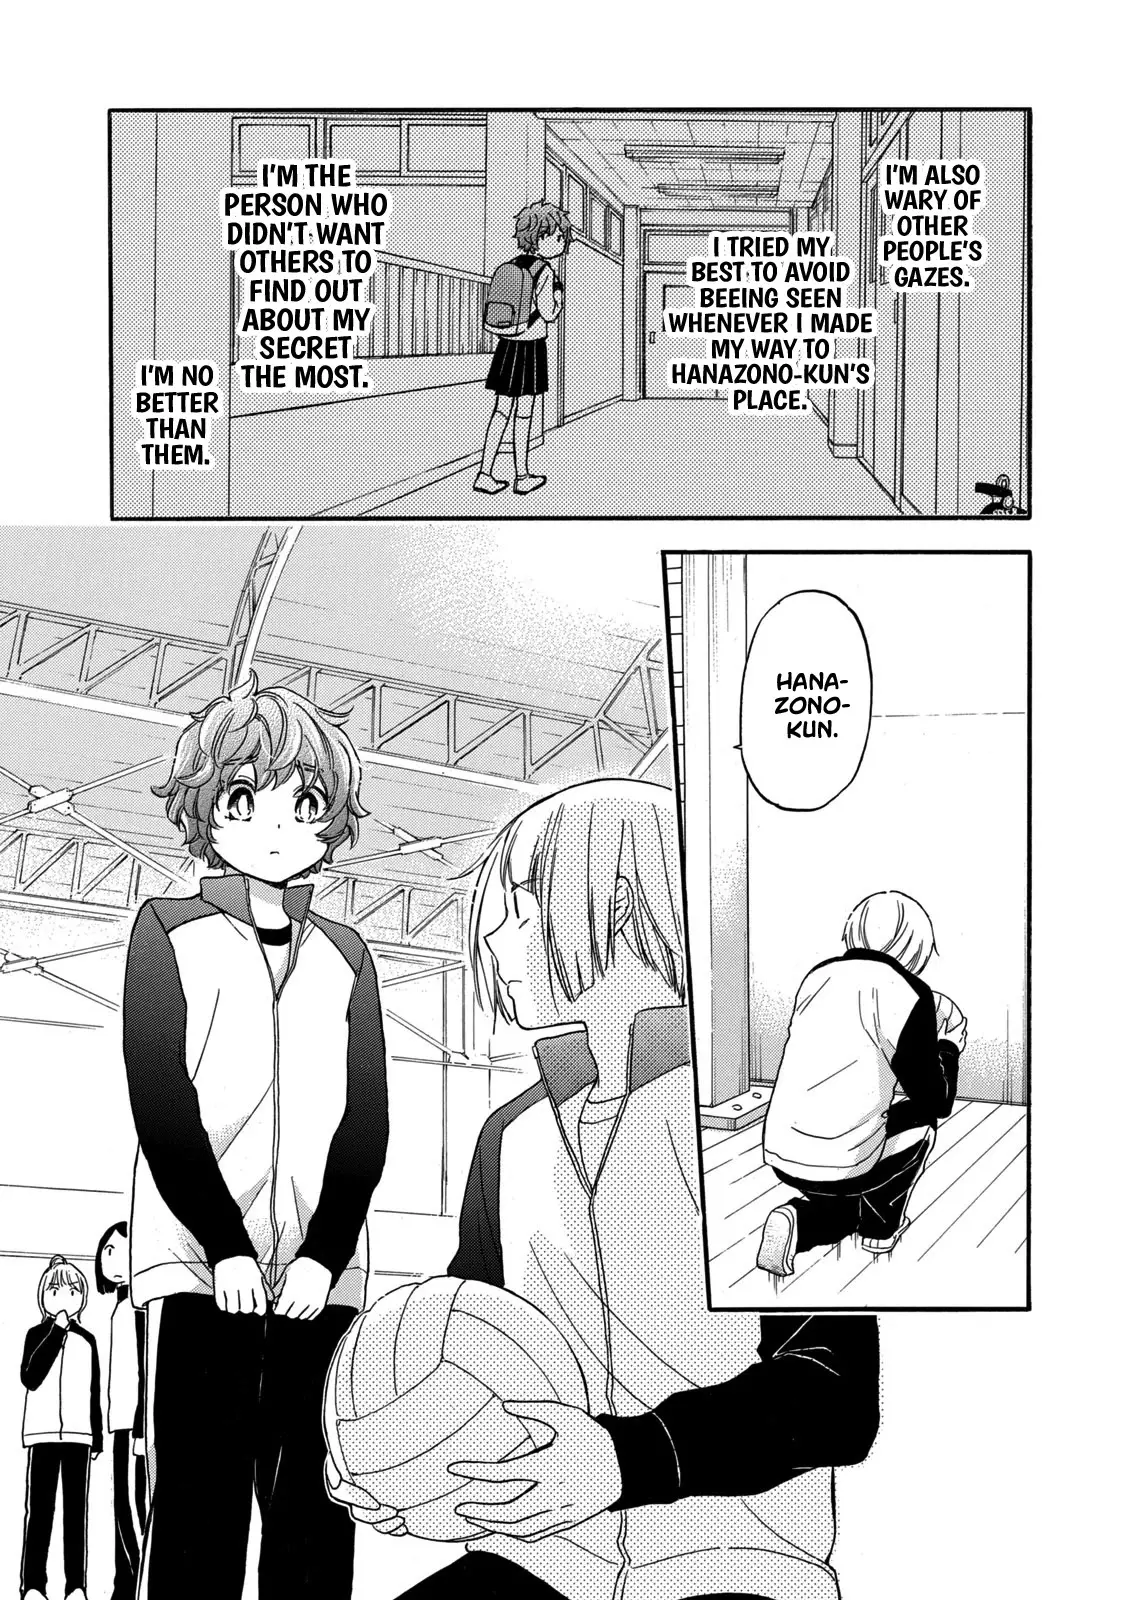 Hanazono And Kazoe's Bizzare After School Rendezvous - 25 page 14-f8b03036